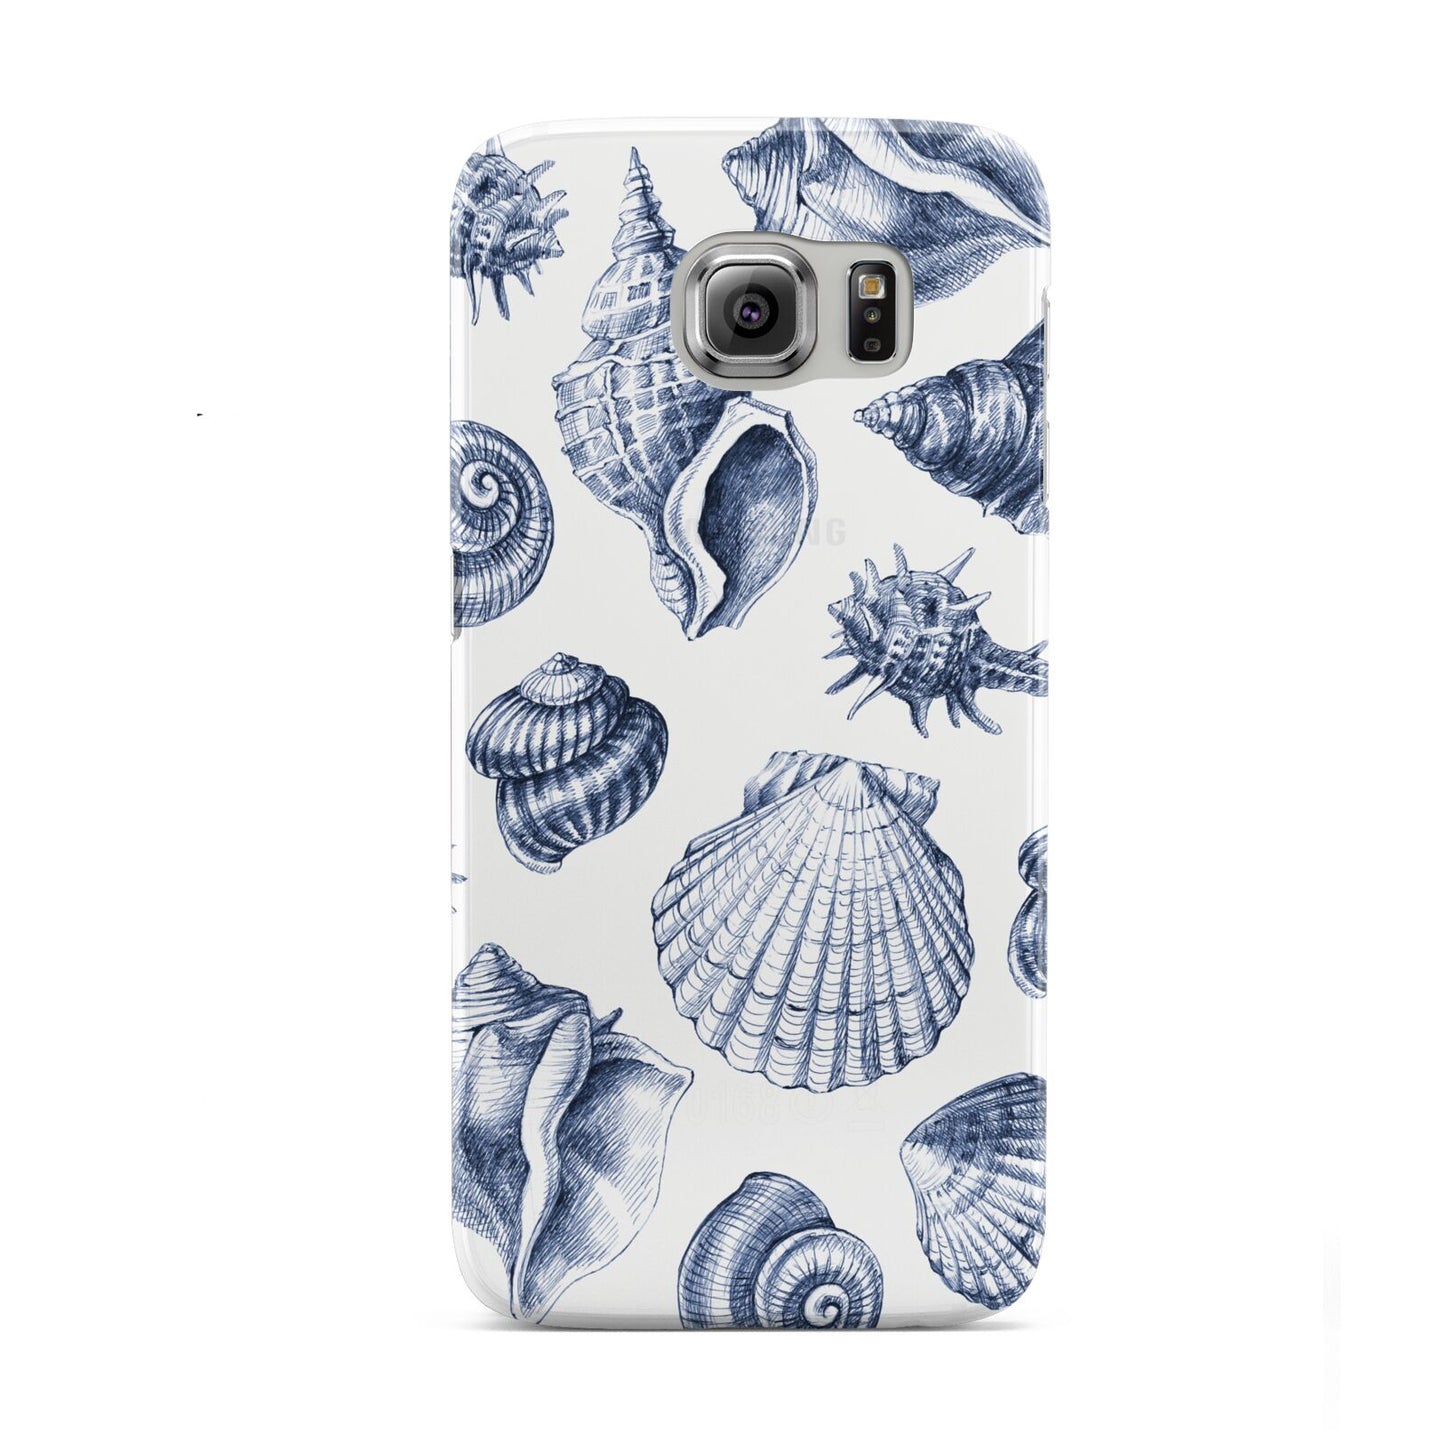 Shell Samsung Galaxy S6 Case